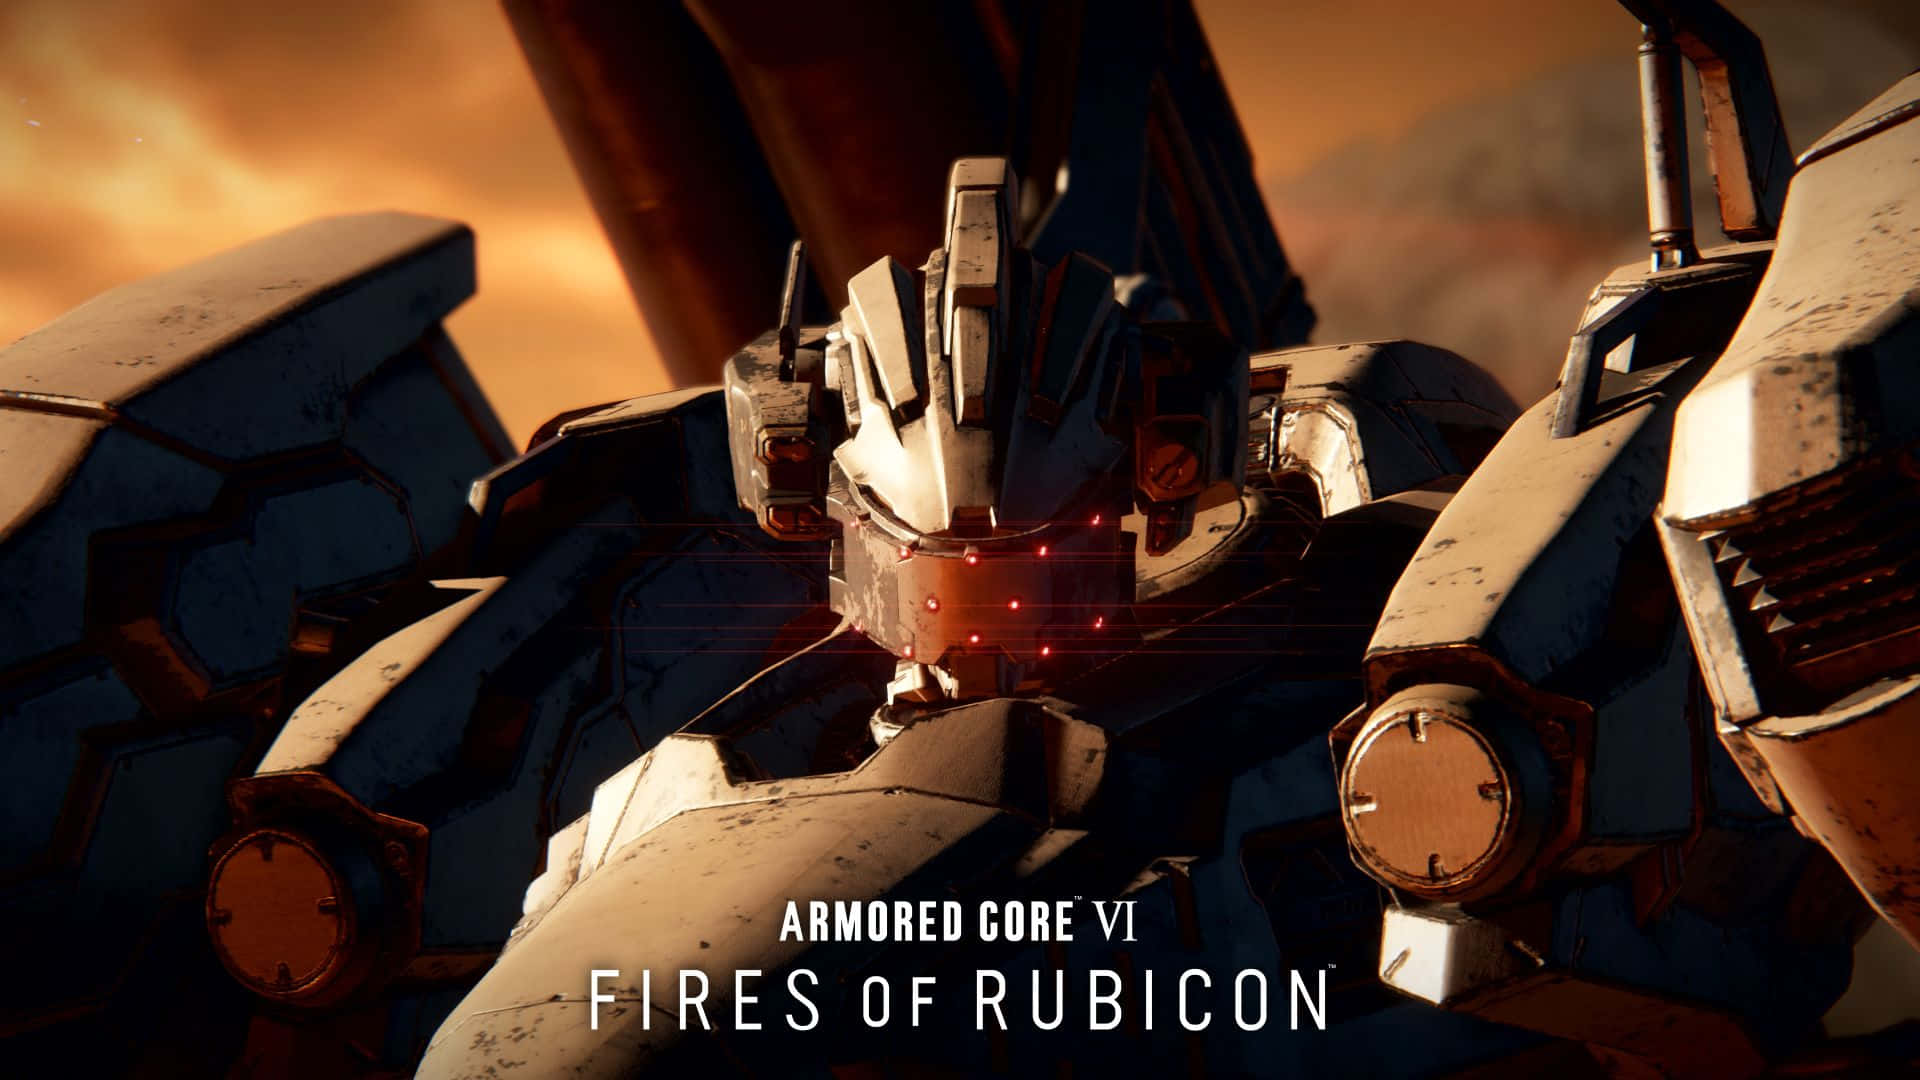 Armored Core V I Firesof Rubicon Promotional Art Wallpaper